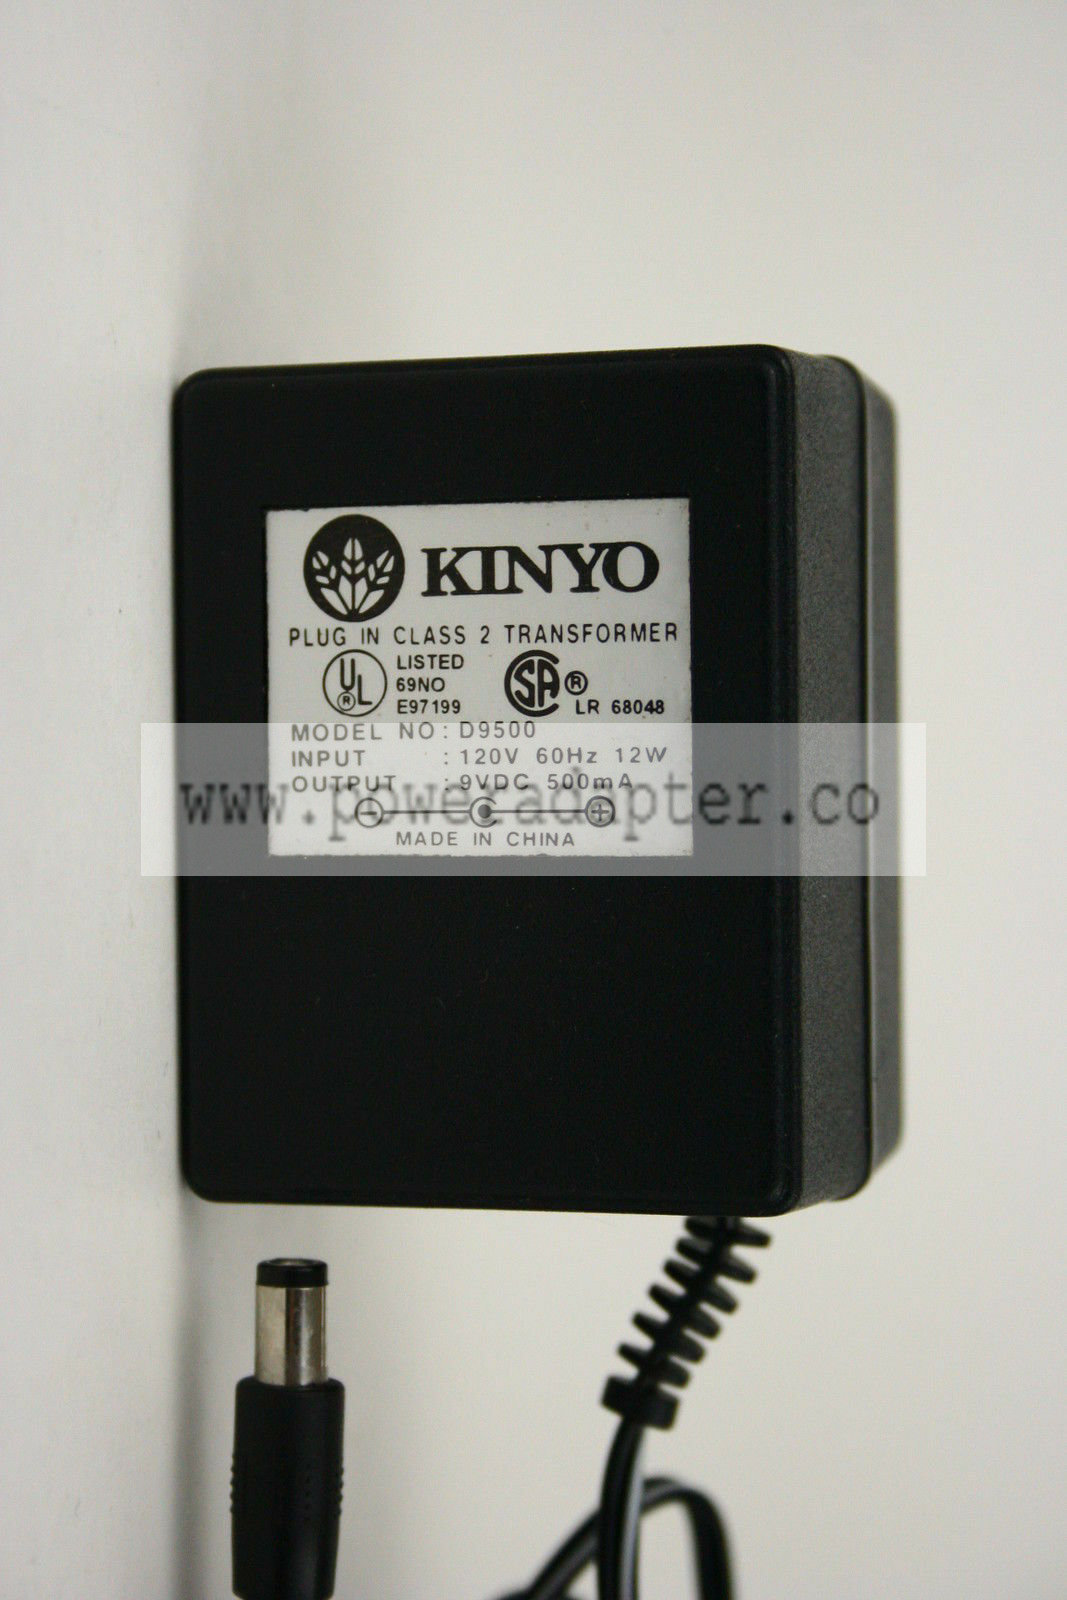 9V DC 500mA KINYO D9500 AC/DC Power Supply Adaptor / Adapter part number:D9500 input: 120v 60hz 12w output:9V DC 500